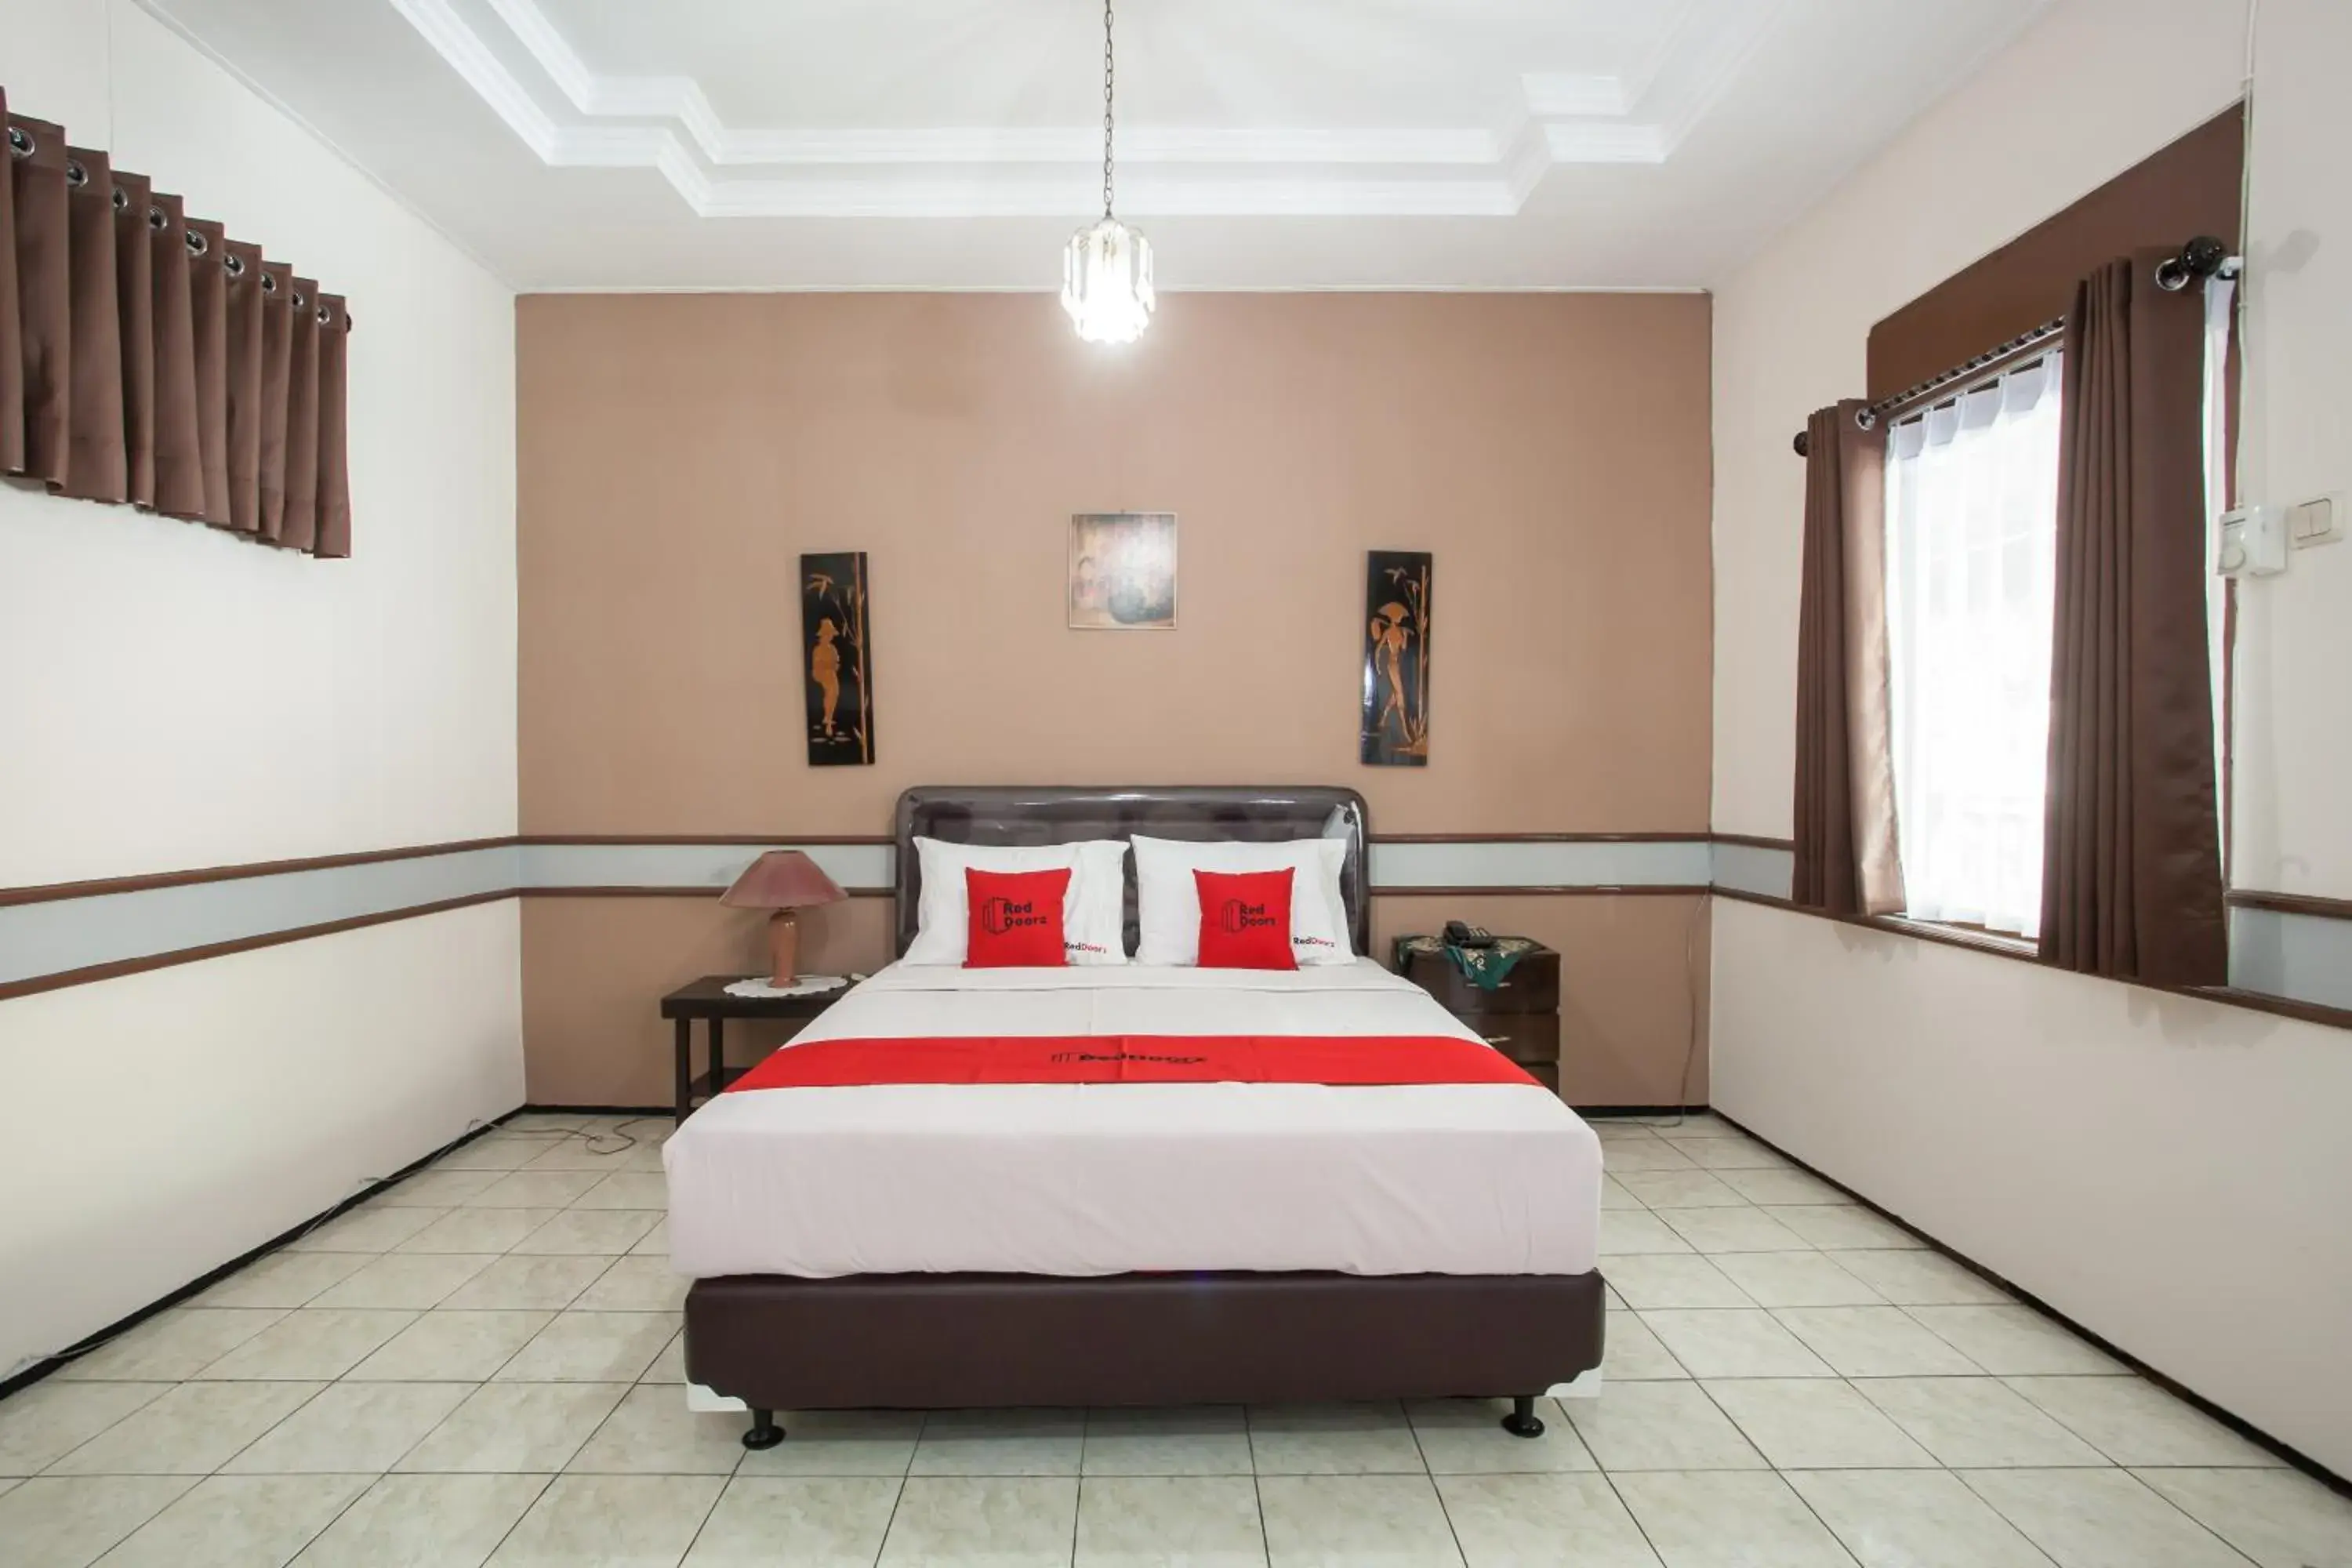 Bedroom, Bed in RedDoorz near Balai Kota Malang